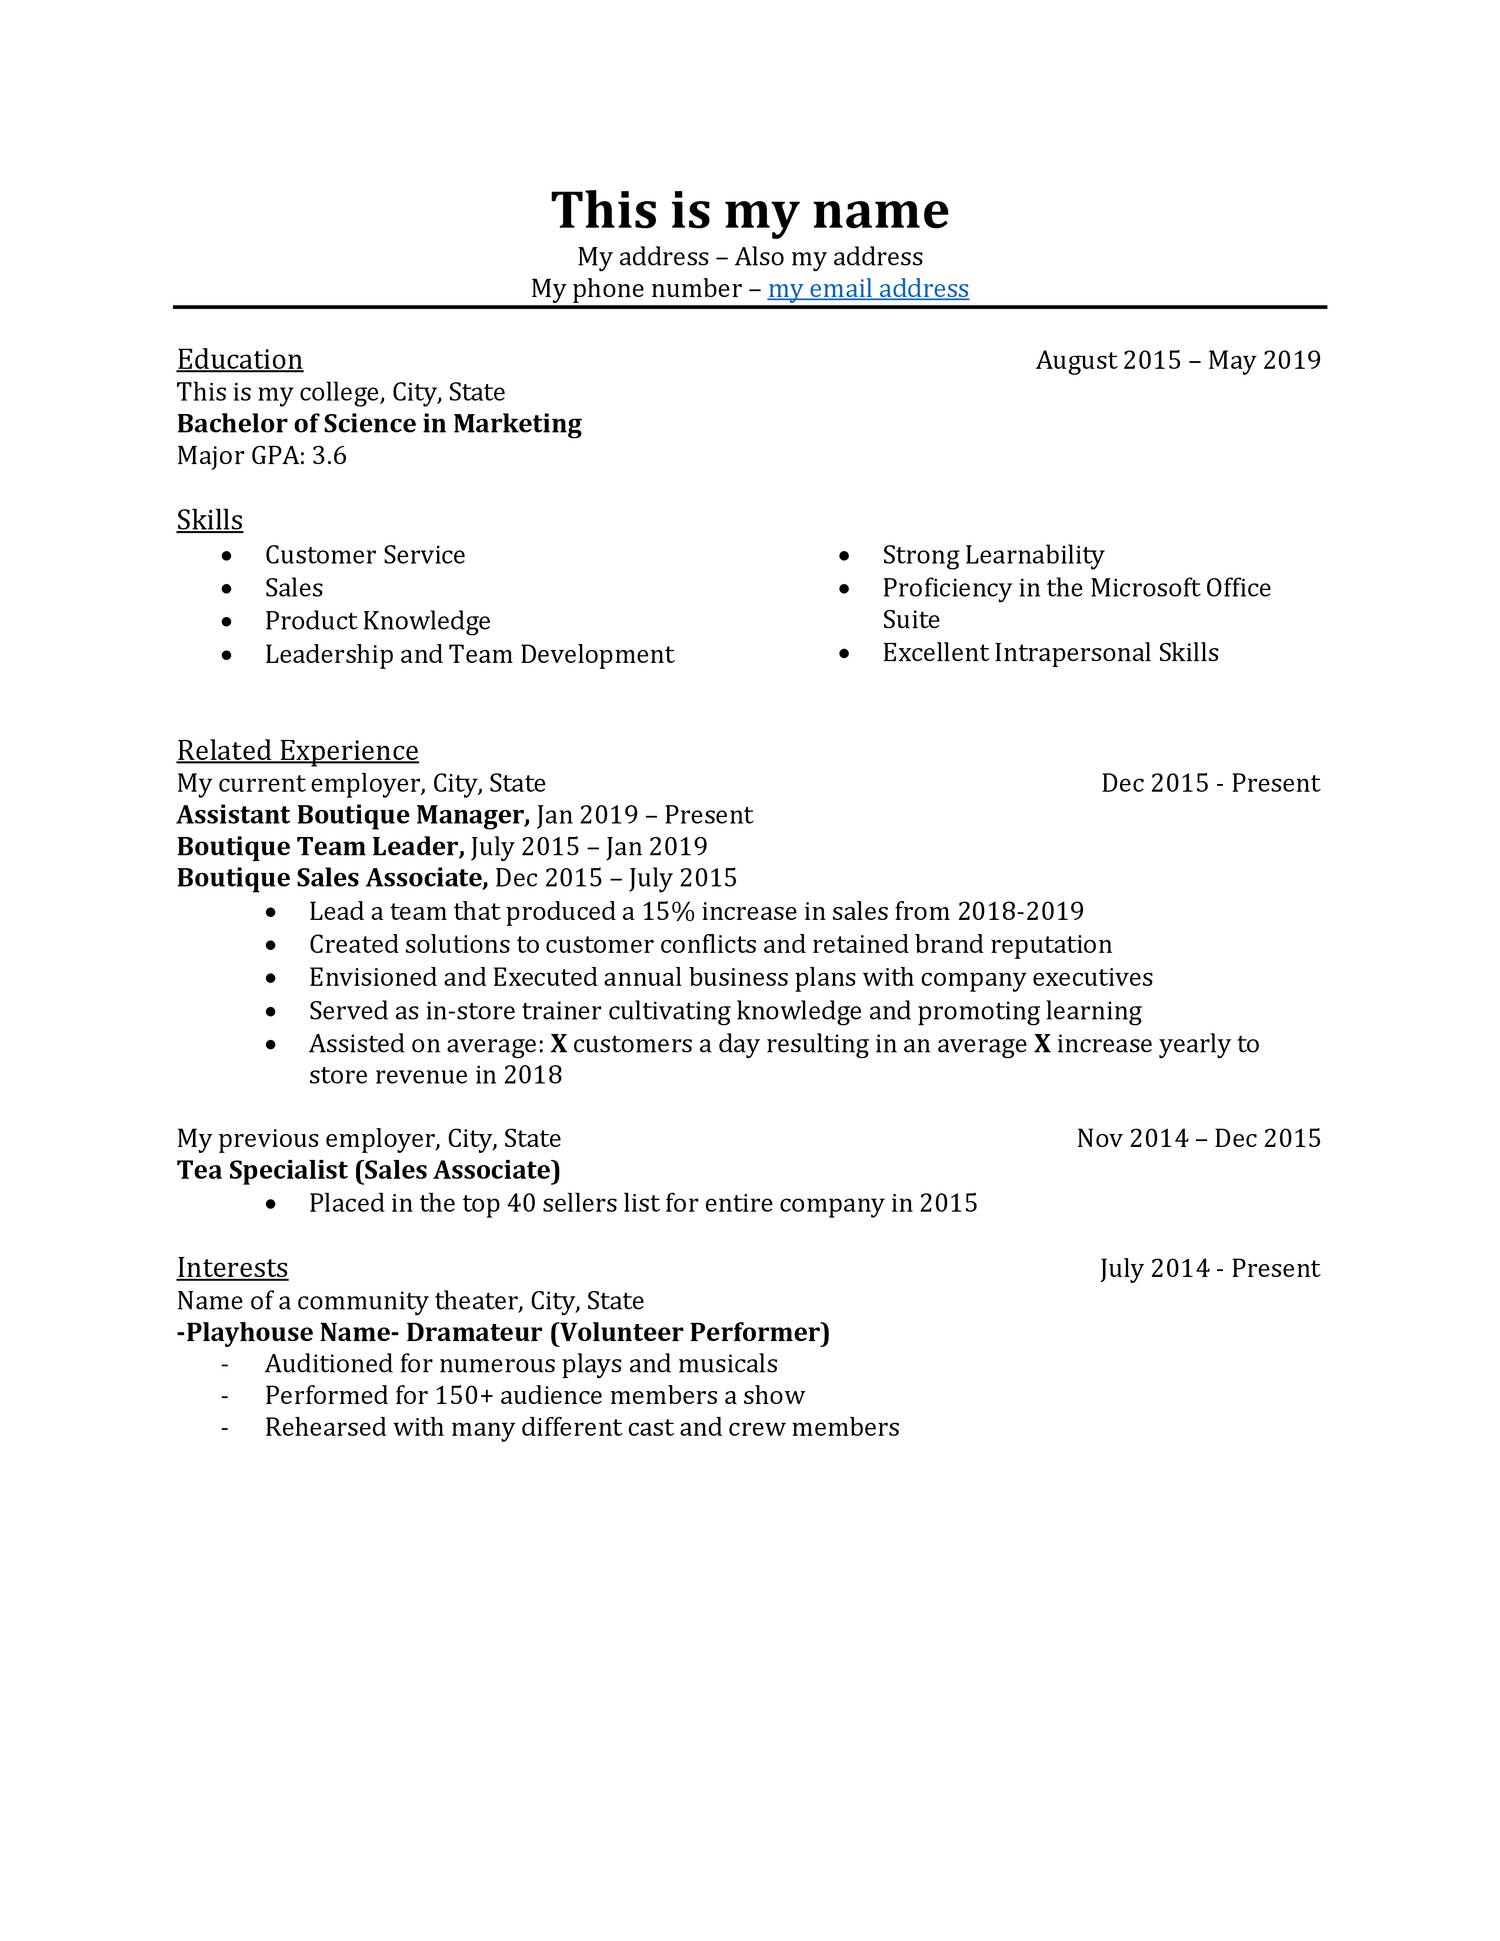 resume template pdf reddit